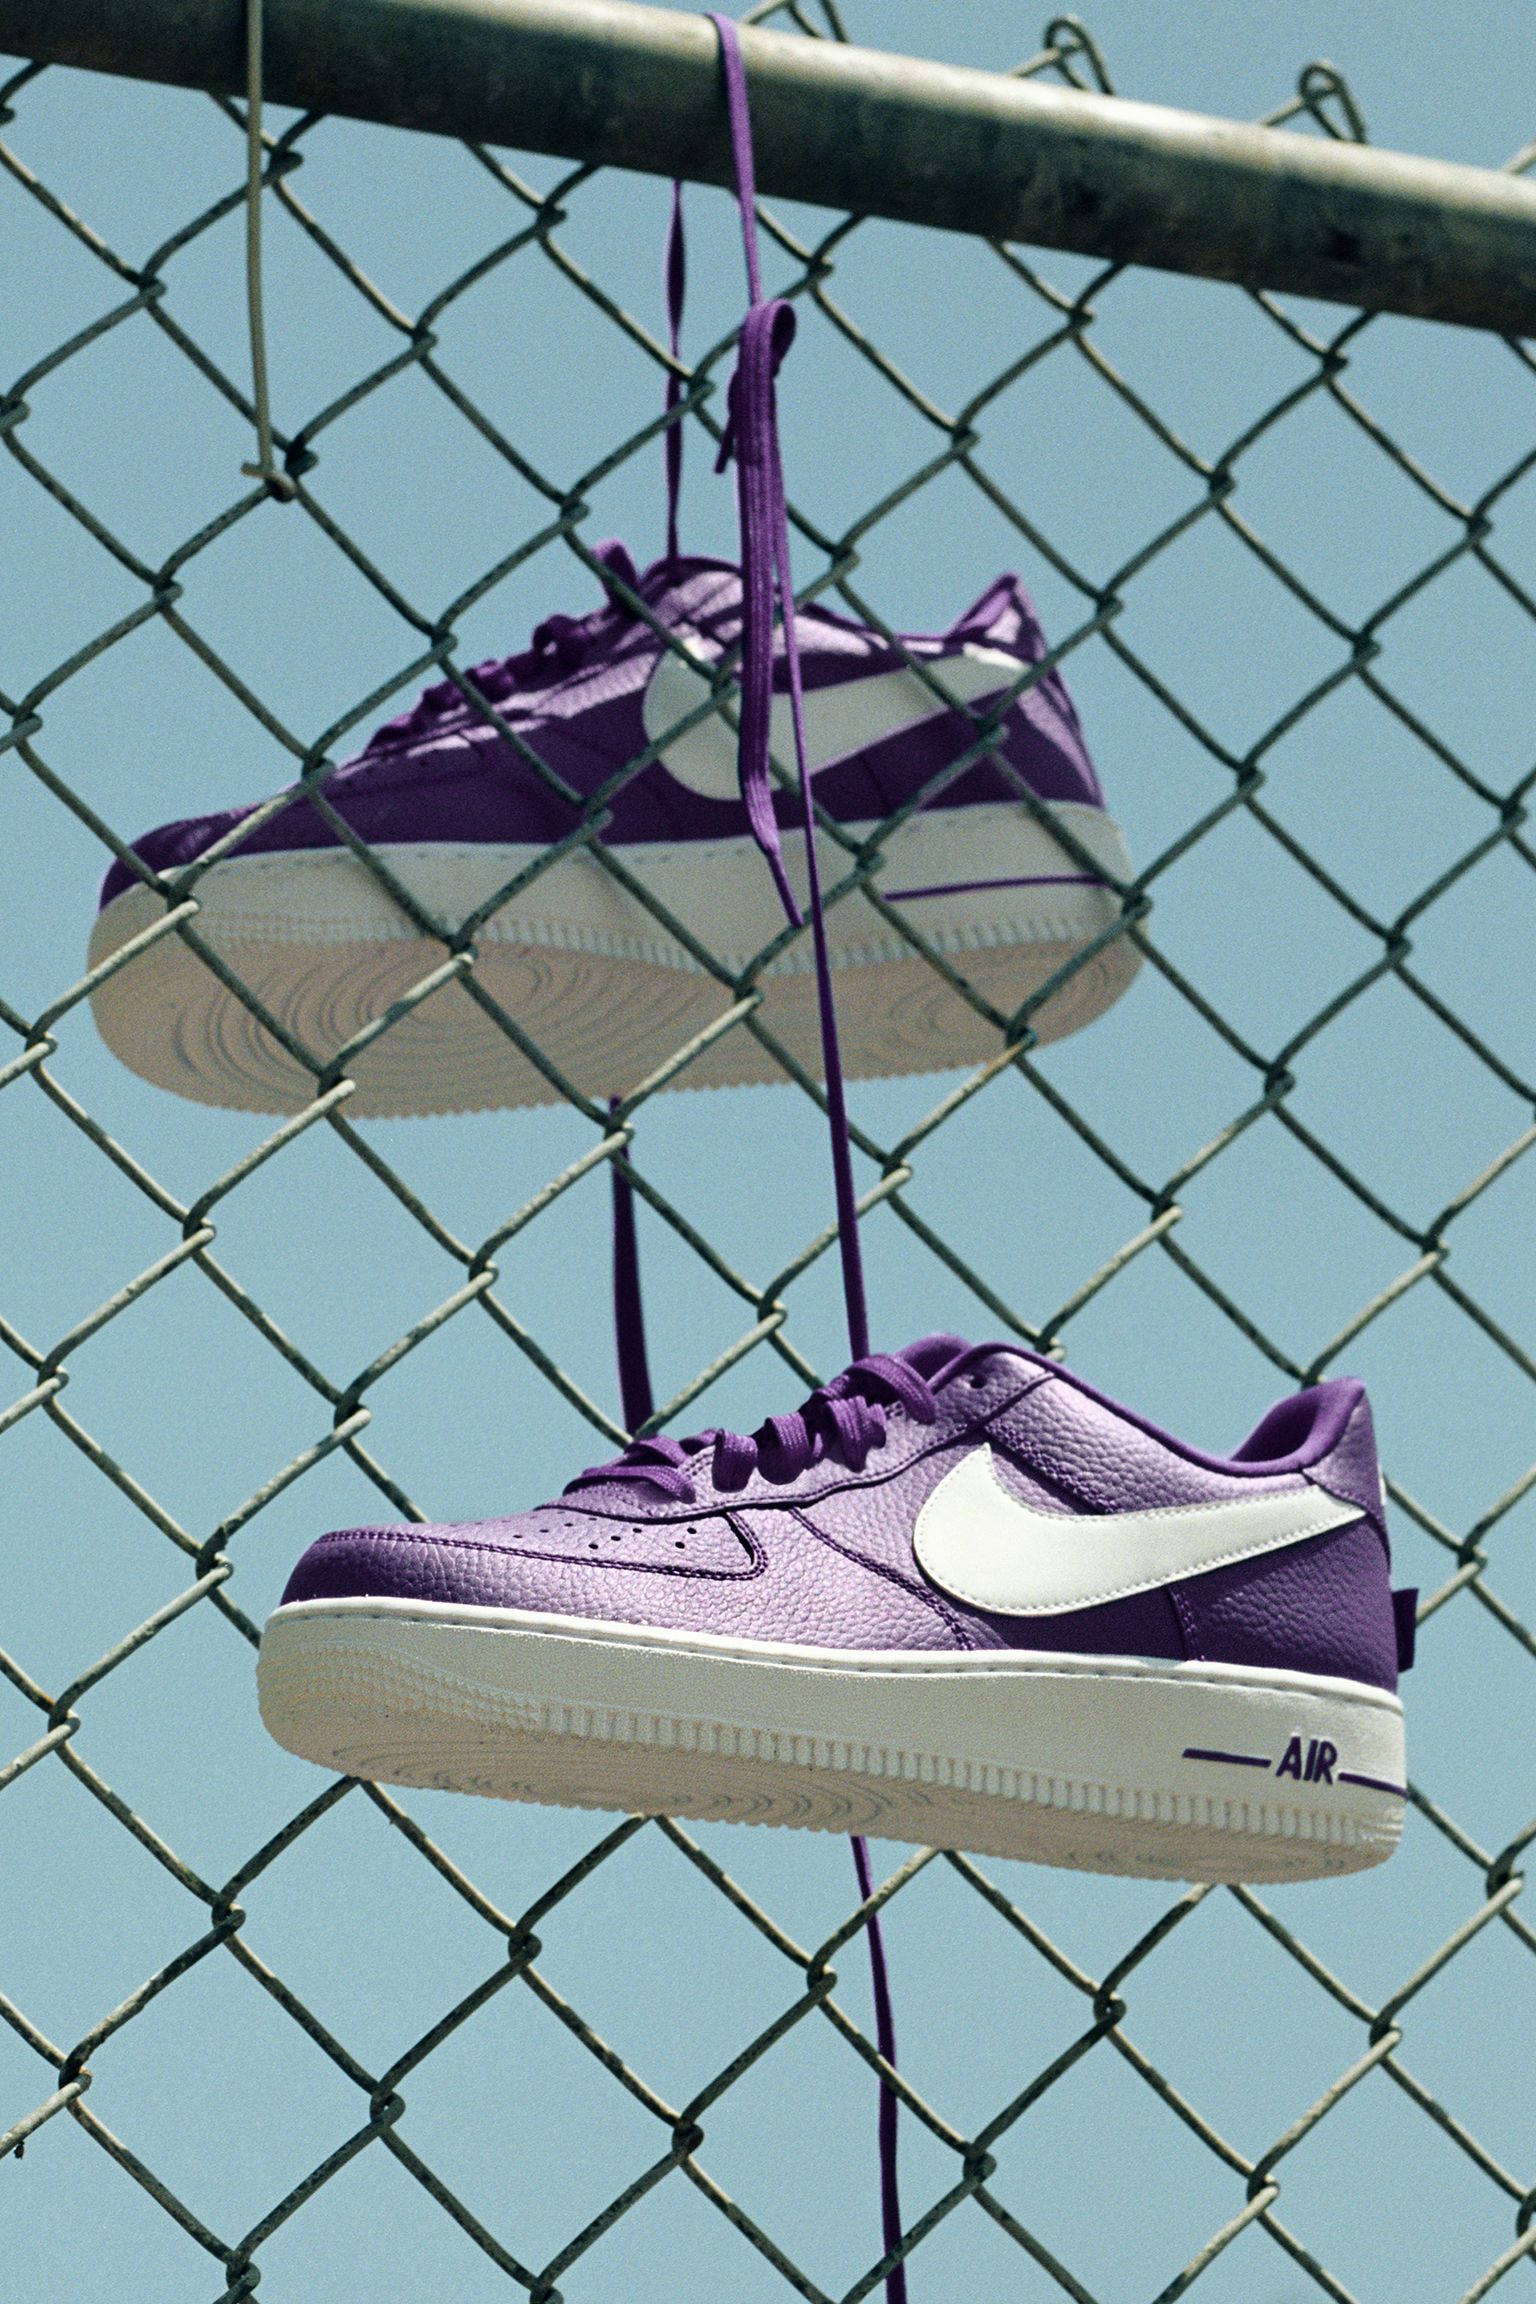 air force 1 nba purple